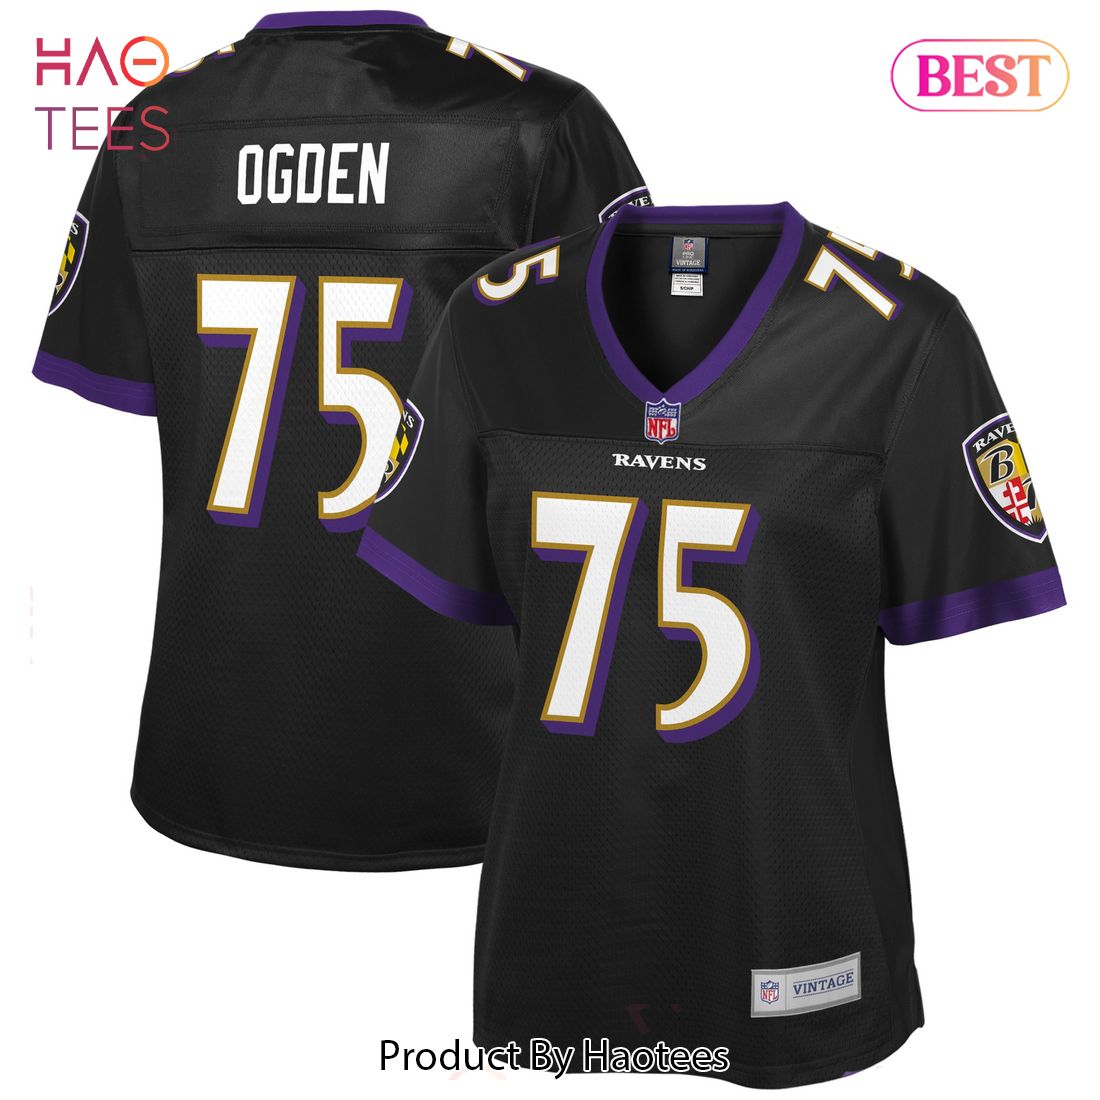 Jonathan Ogden Baltimore Ravens NFL Pro Line Women’s Retired Player Jersey Black